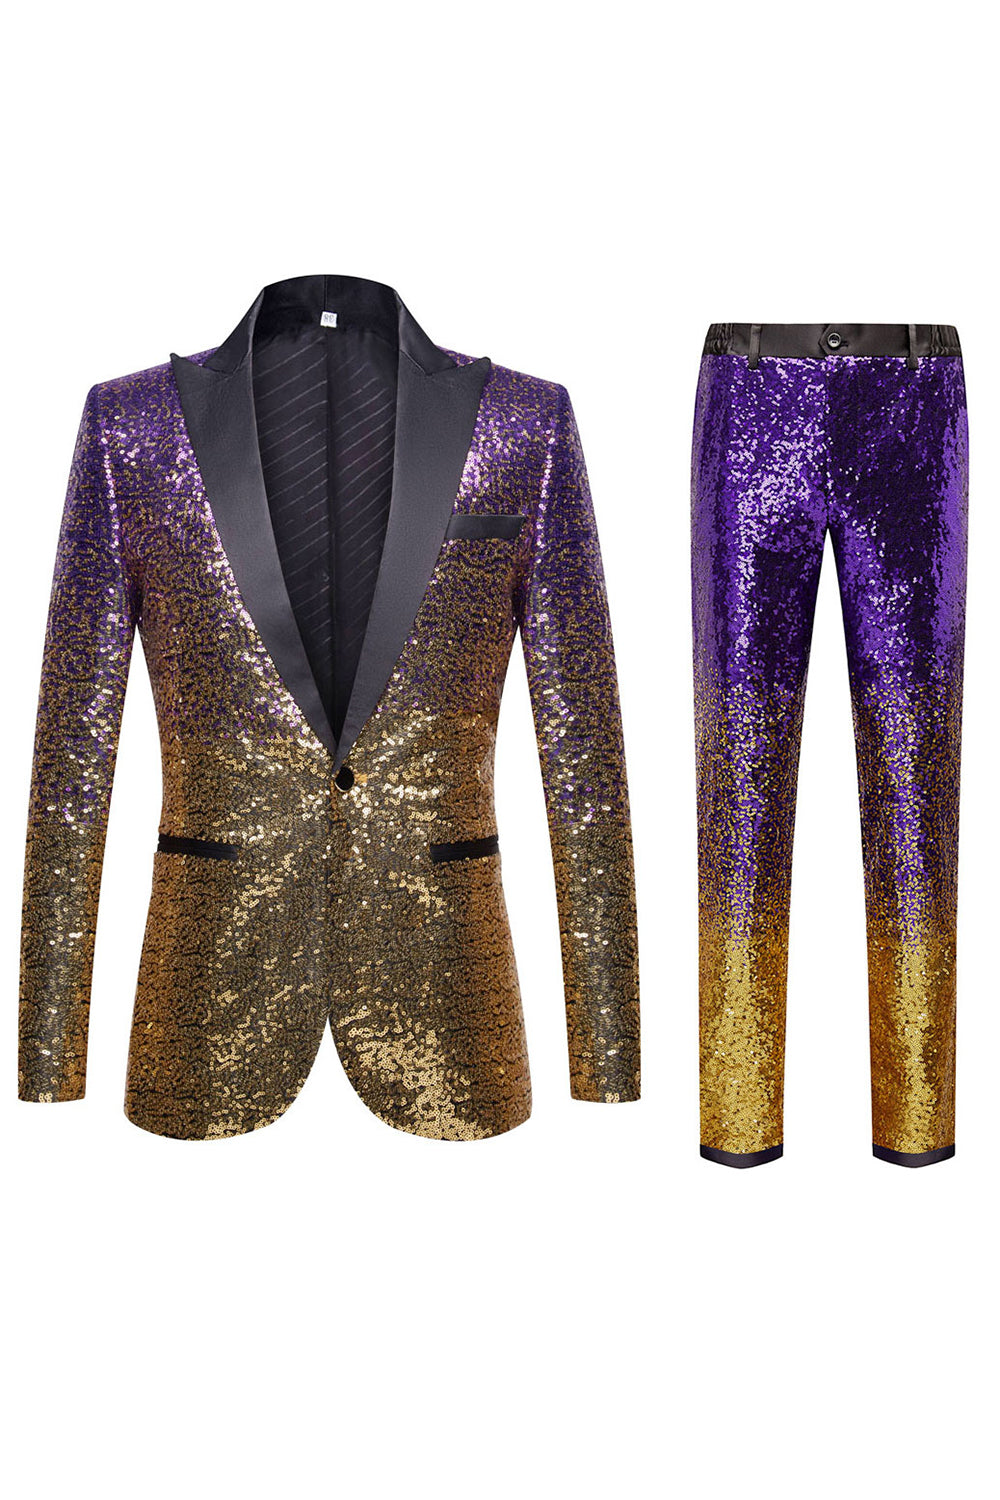 Zapaka Ombre Sequins Prom Suits Purple Men's 2 Piece Slim Fit Notched ...